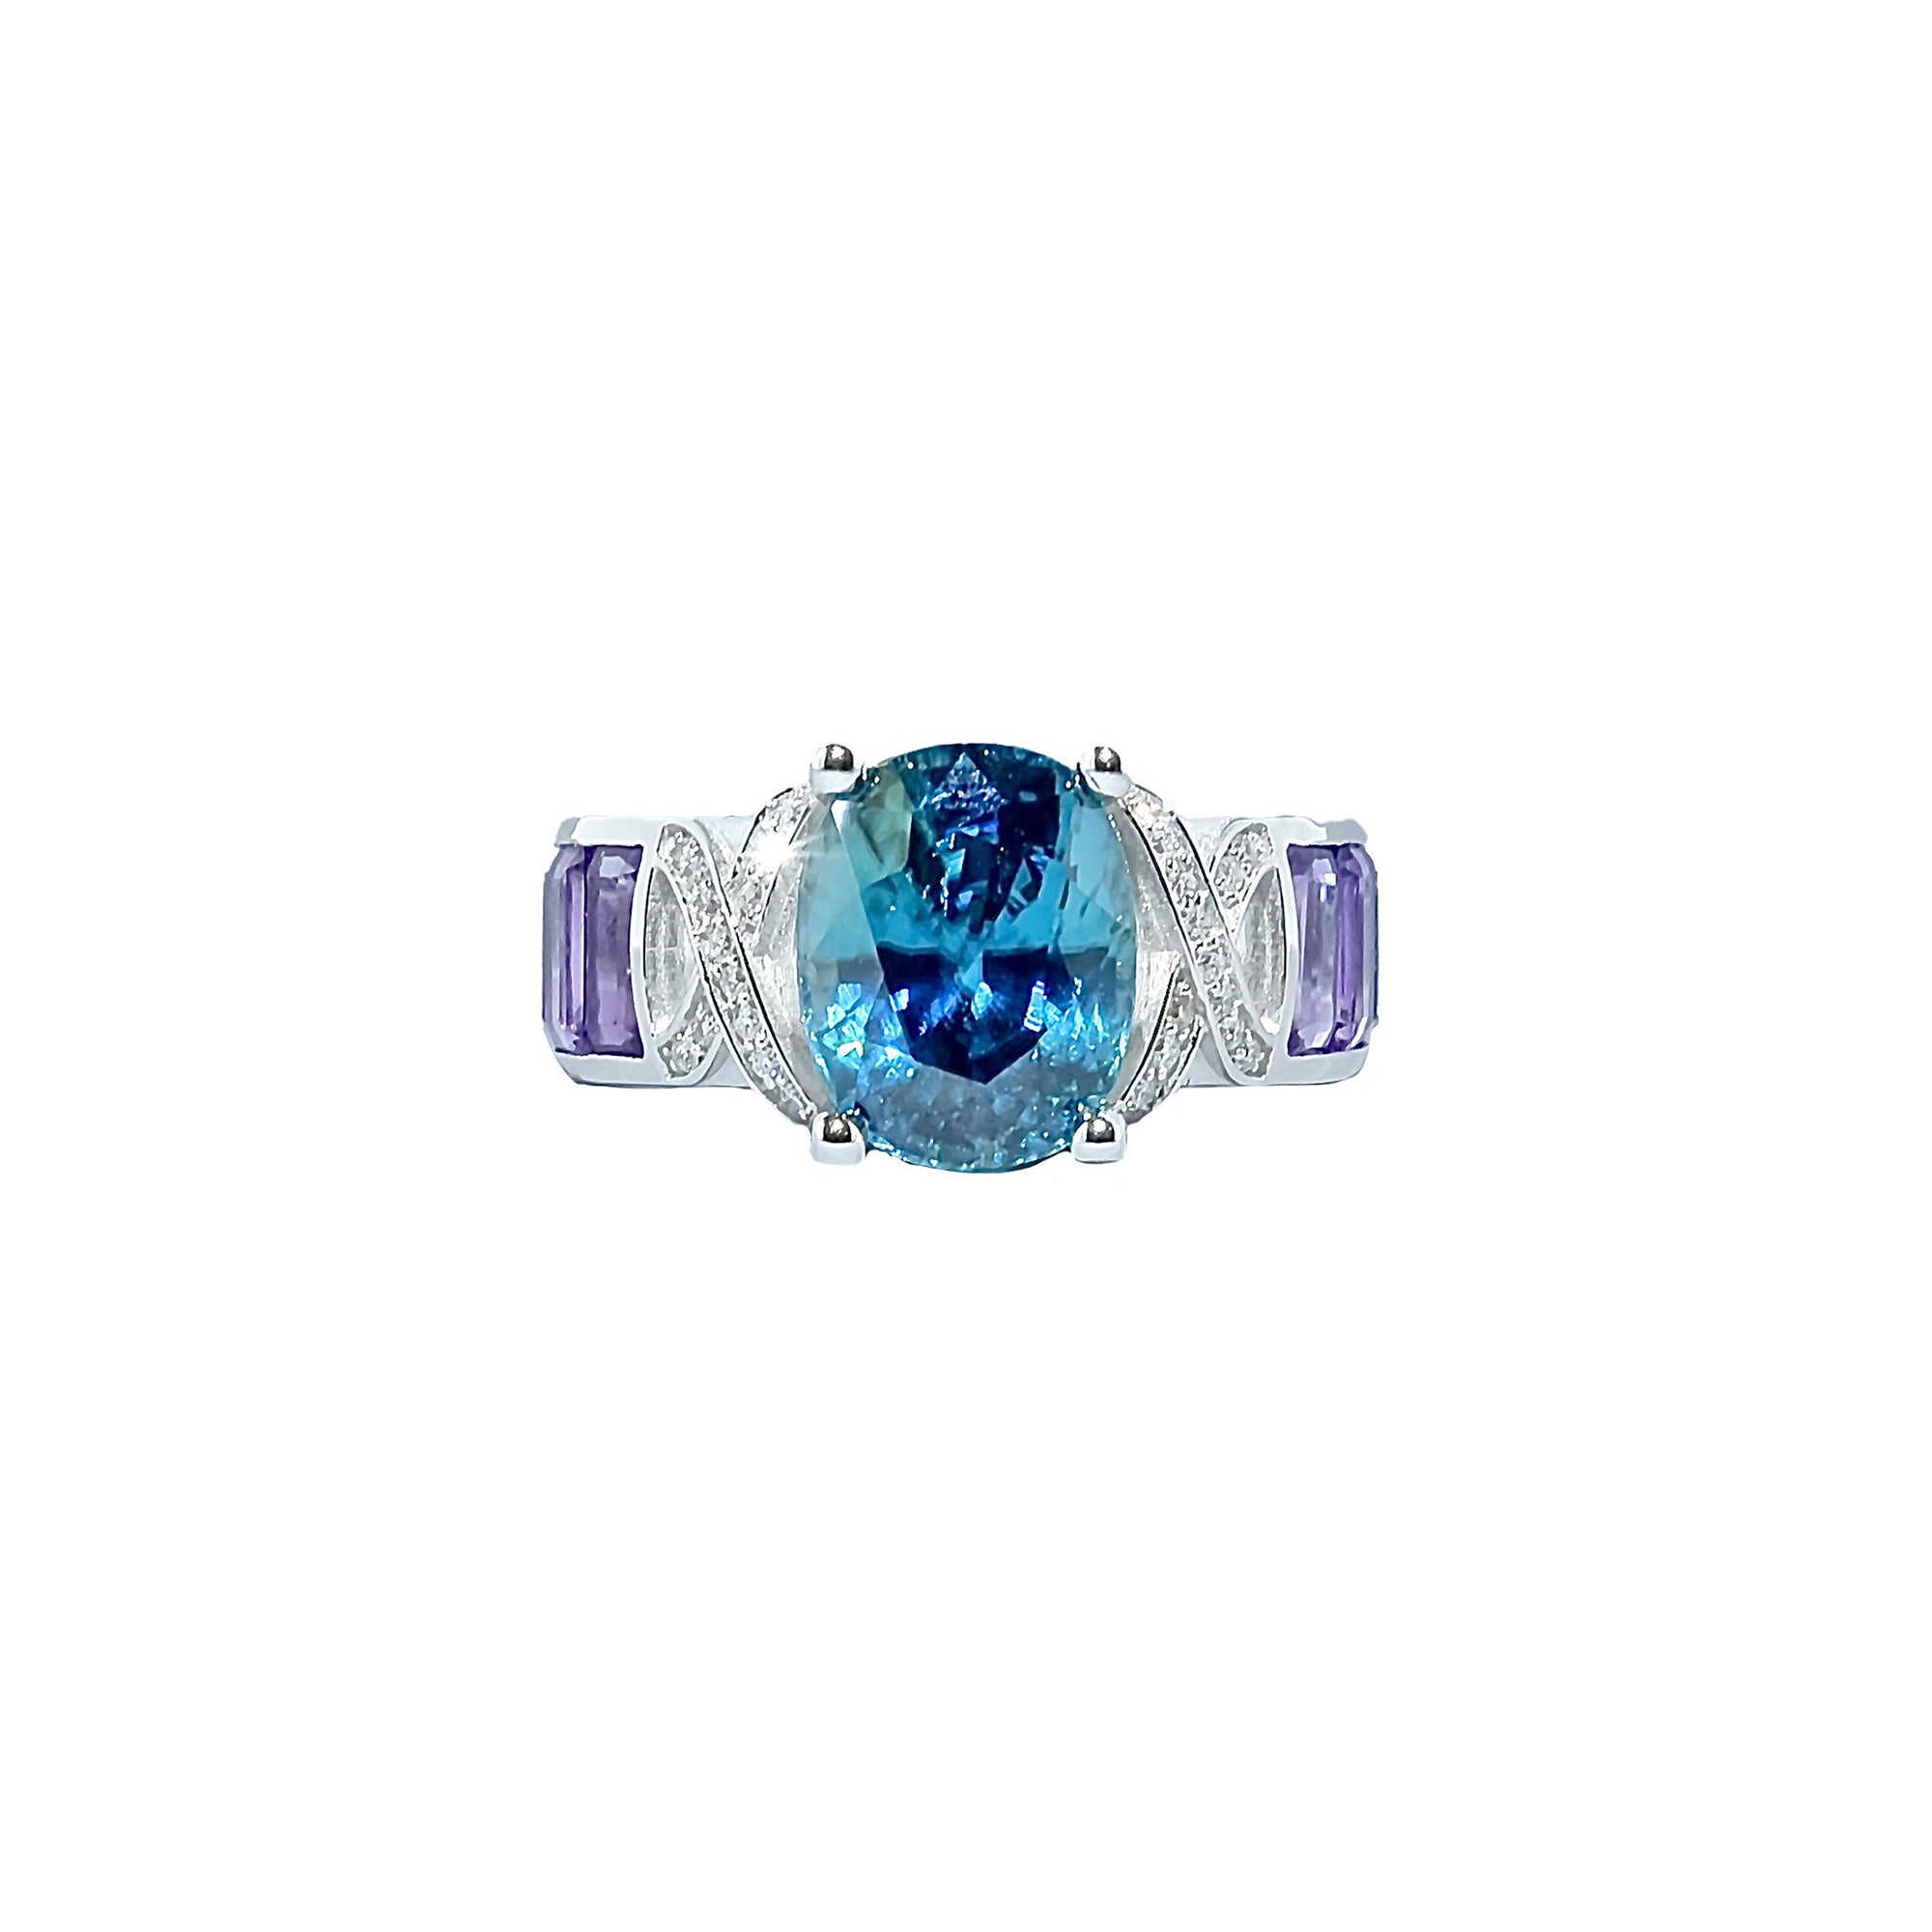 Joycio Contemporary Gemstone Cocktail Ring - Electric Blue Oval W204